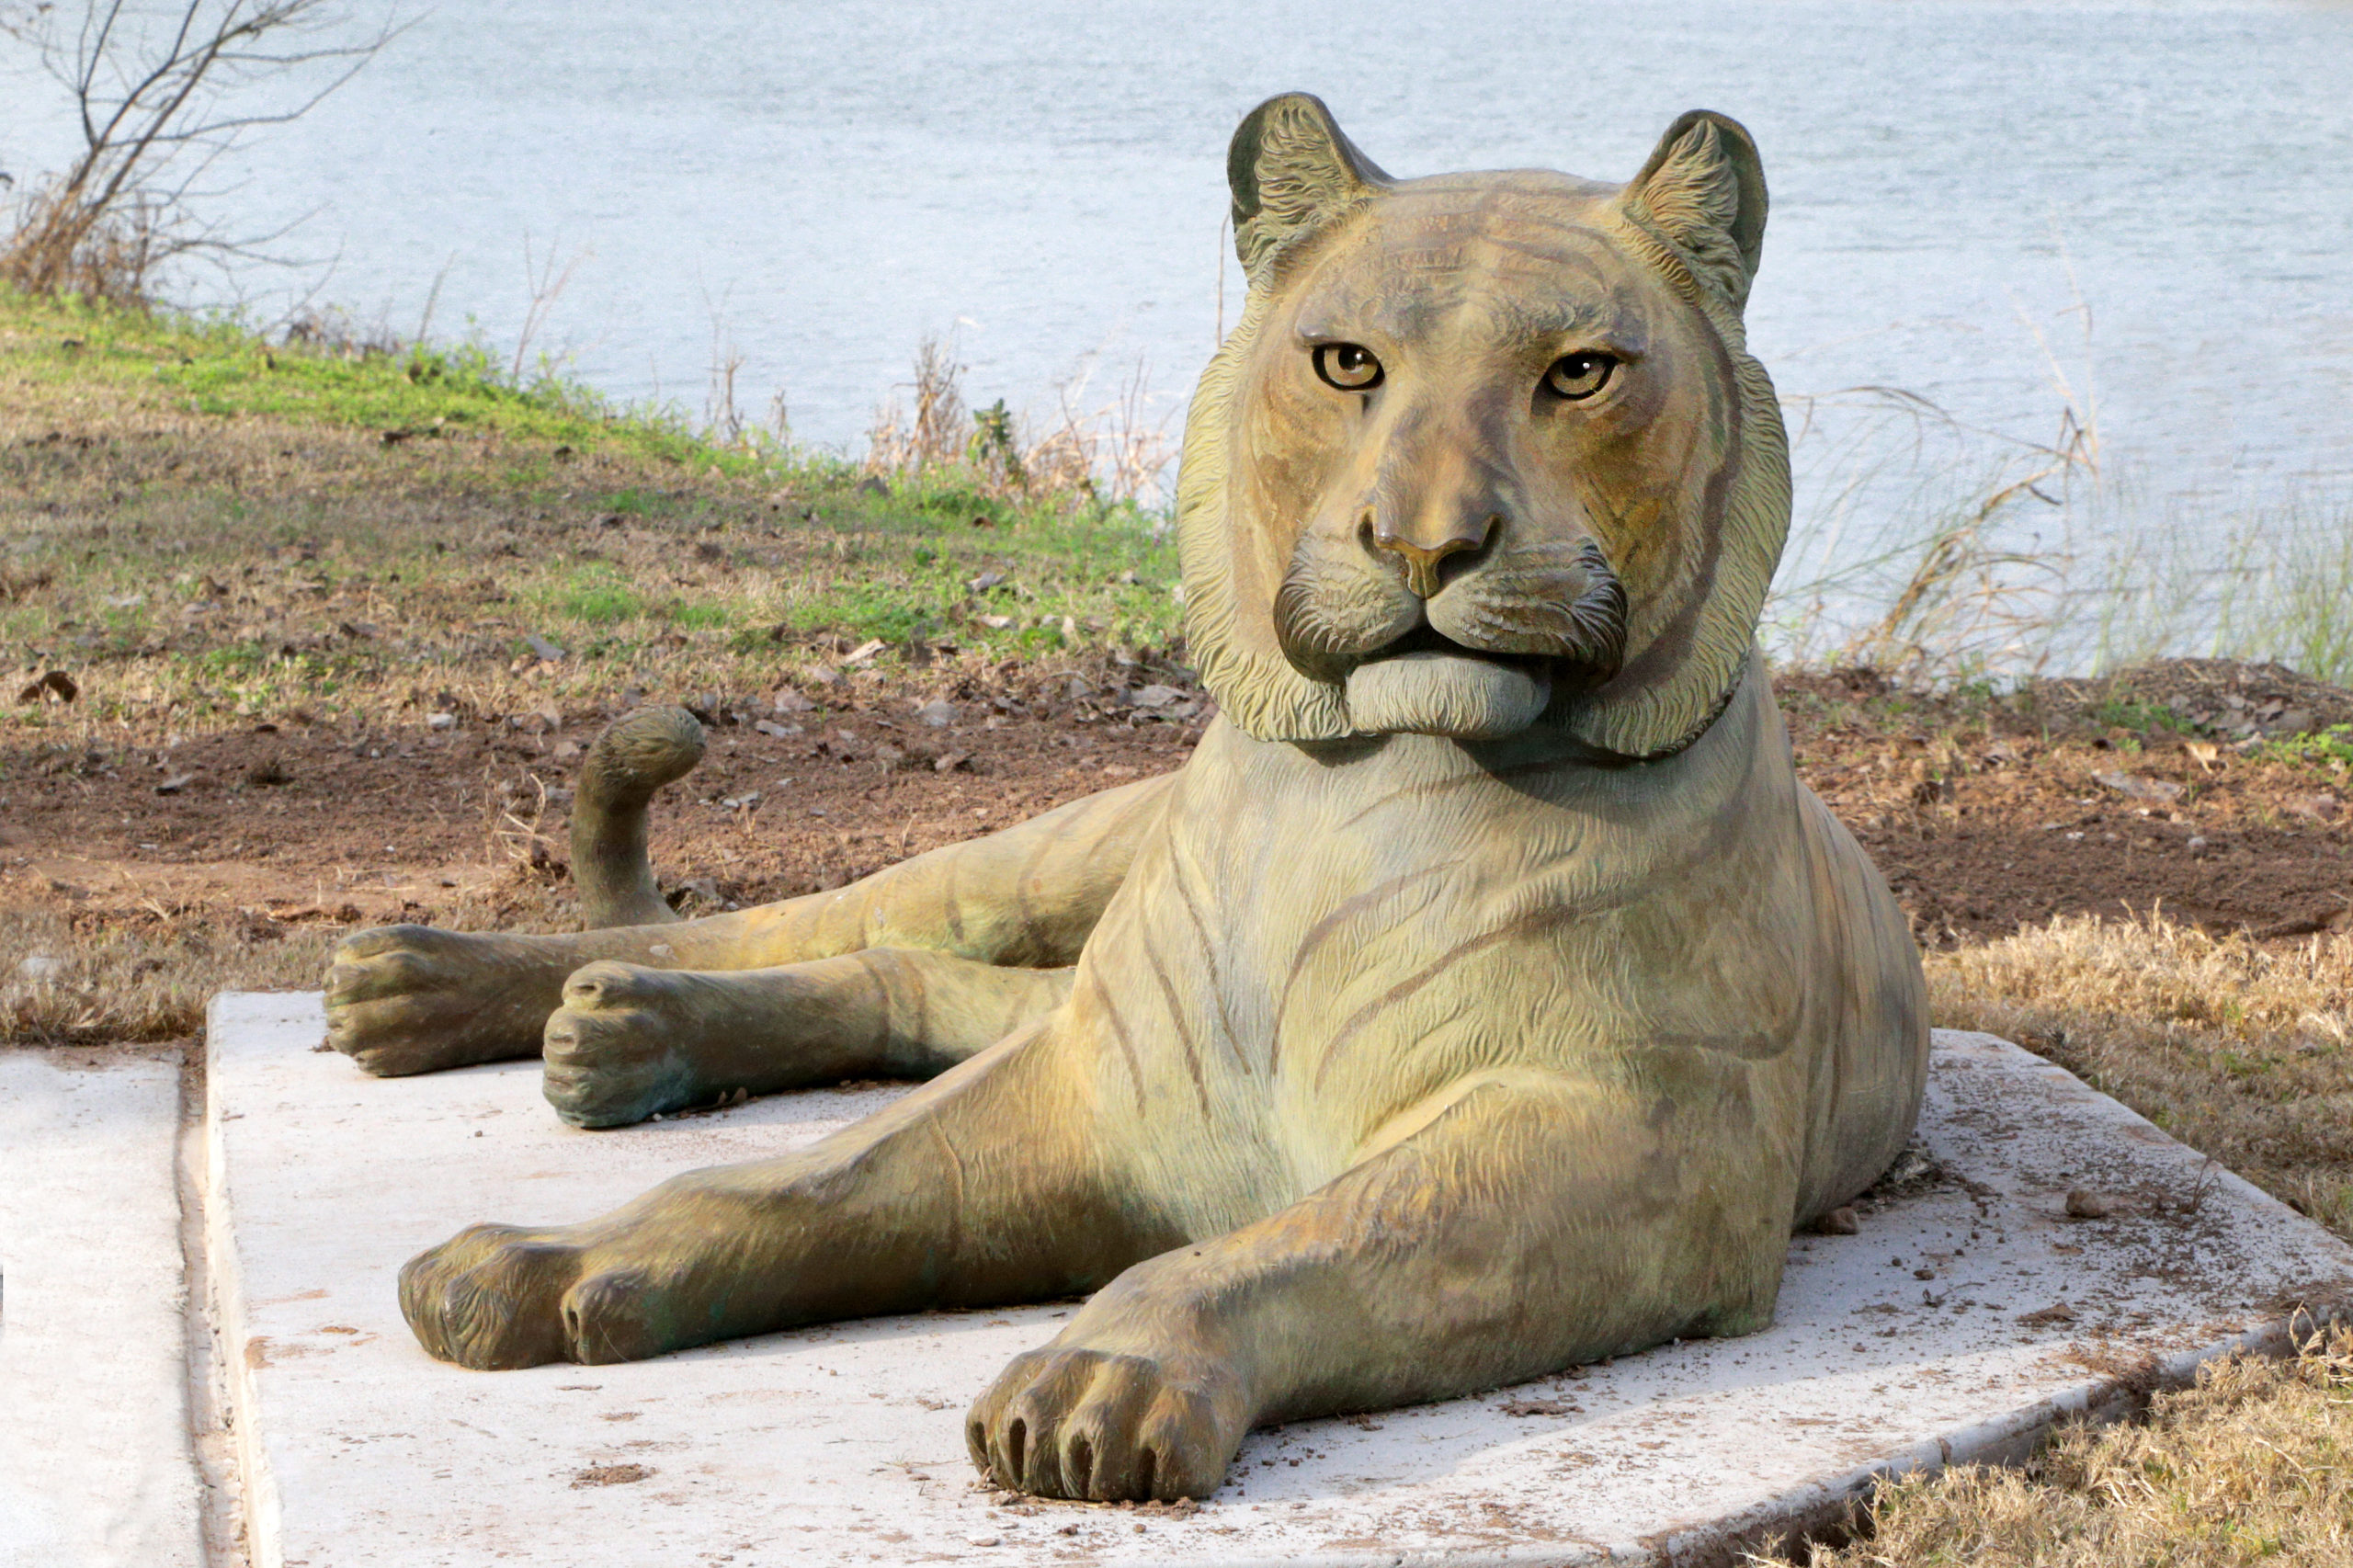 Sumatran Tiger Statue